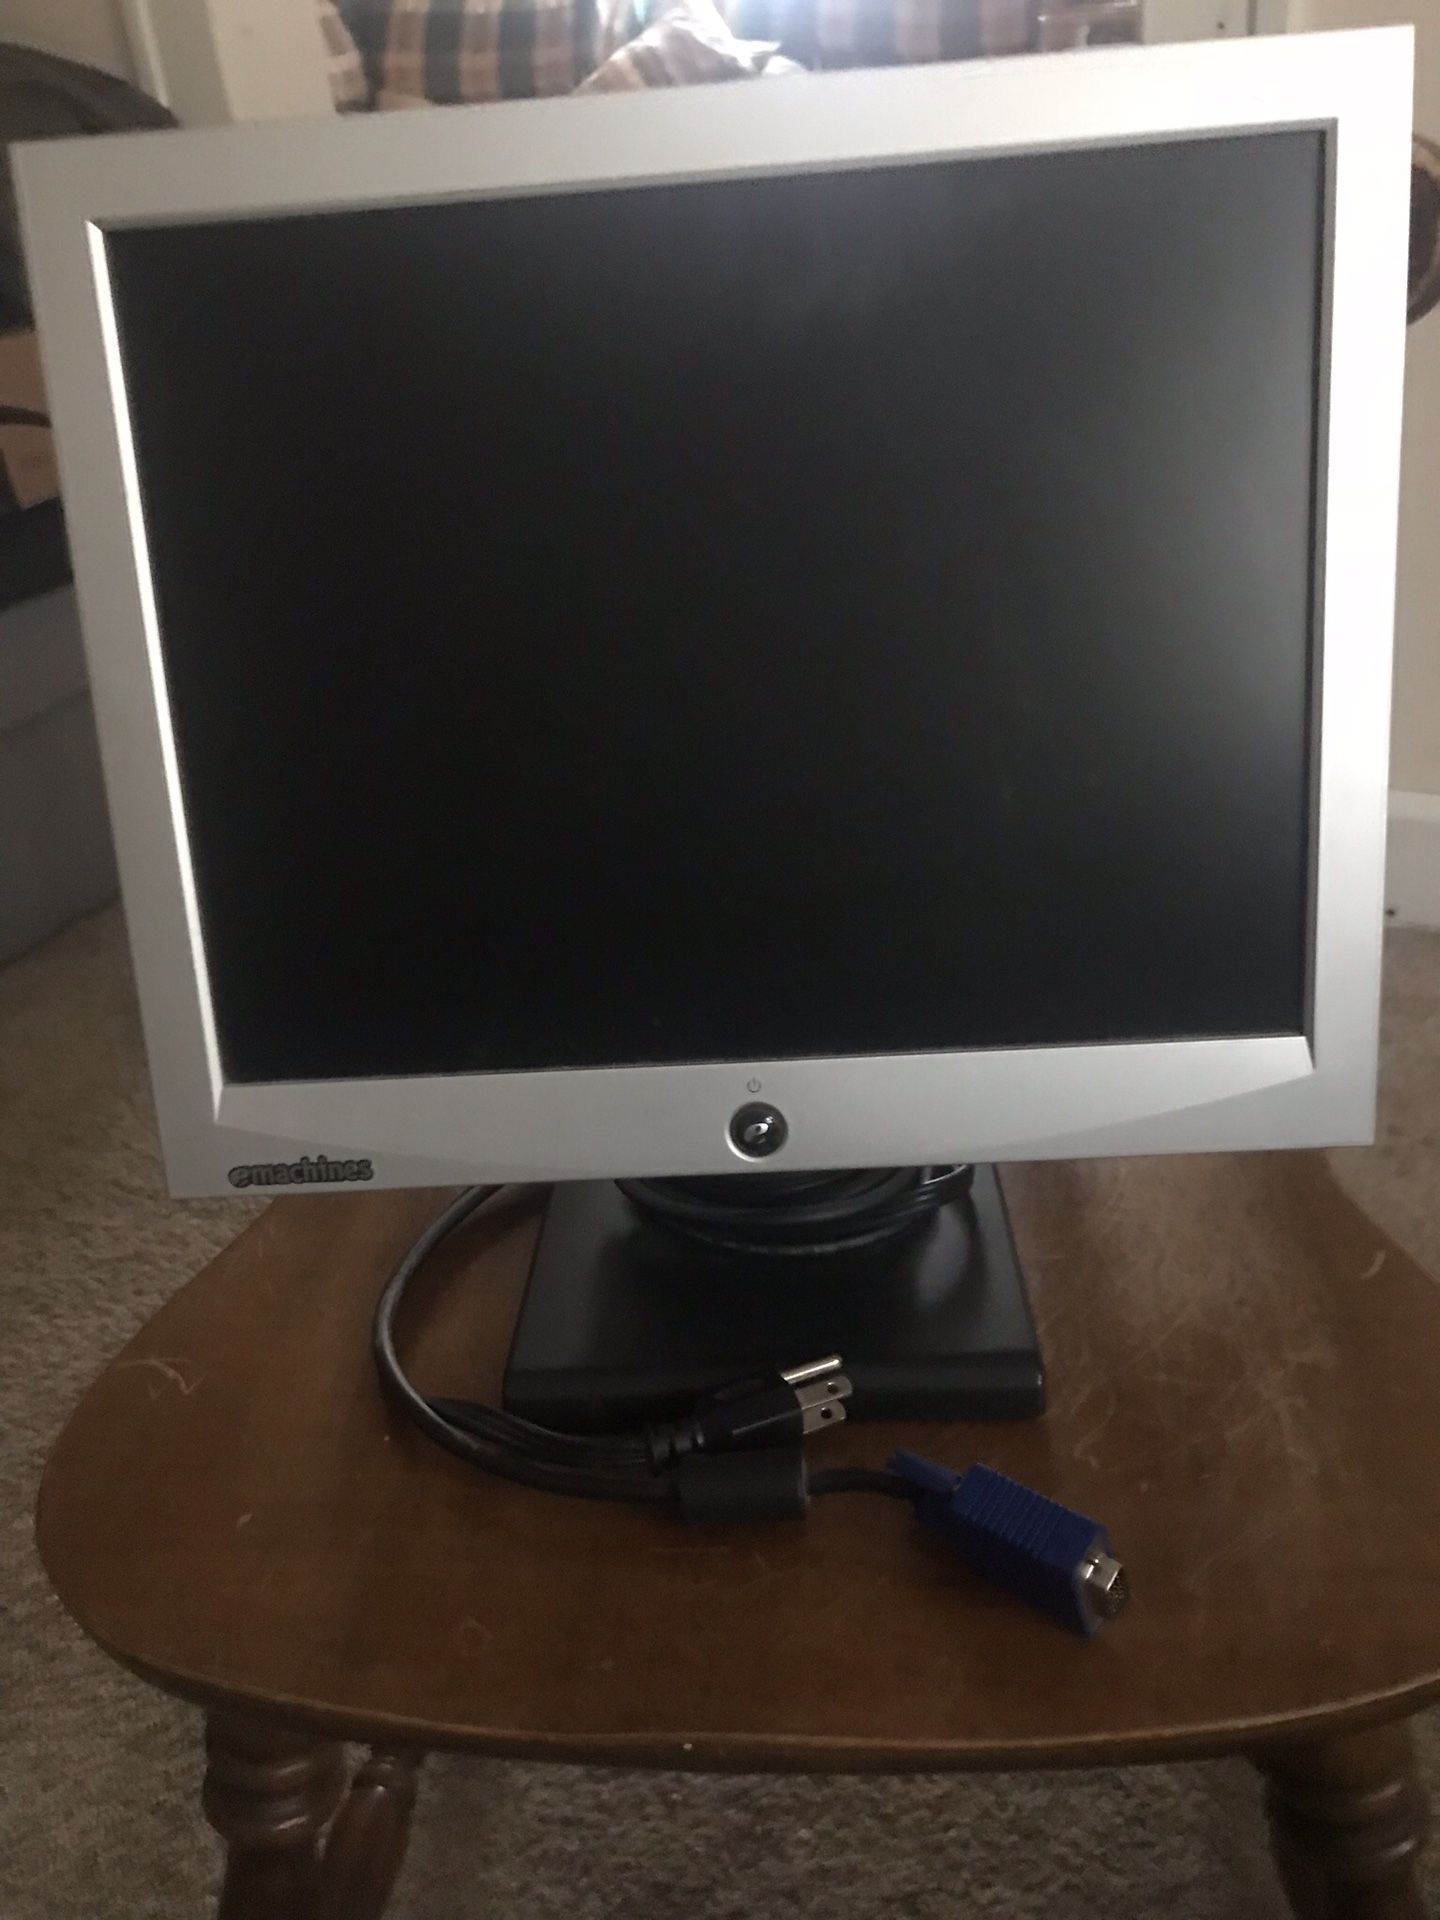 emachine 15 inch computer monitor